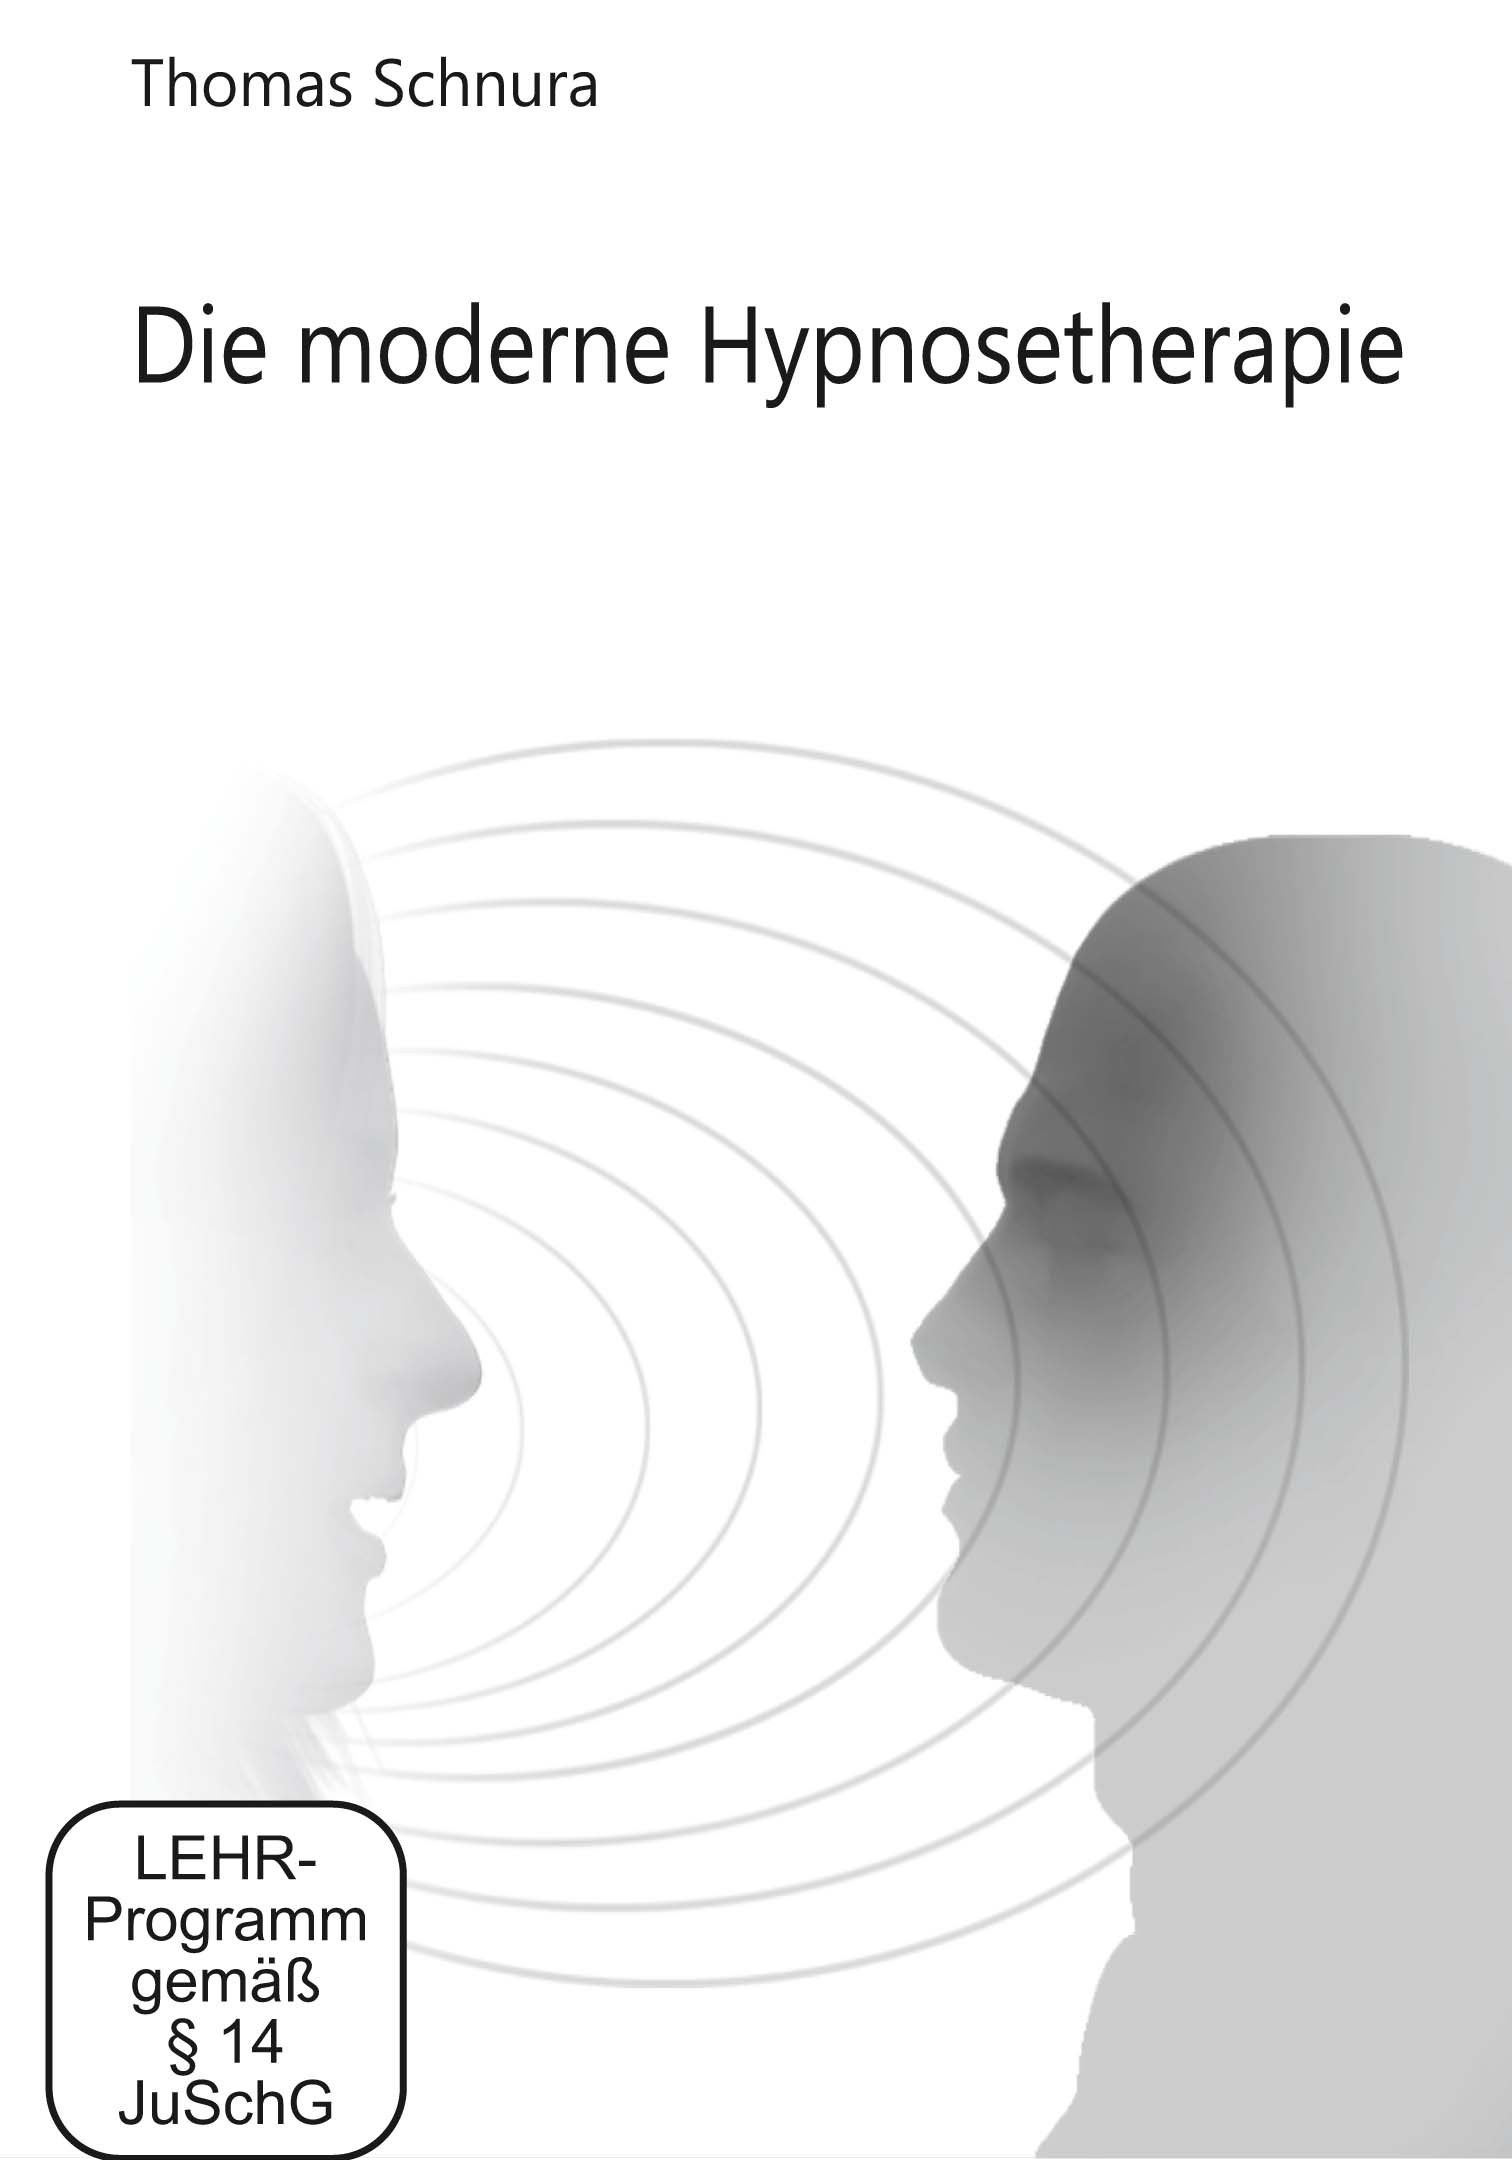 Image of Die moderne Hypnosetherapie, 2 DVDs